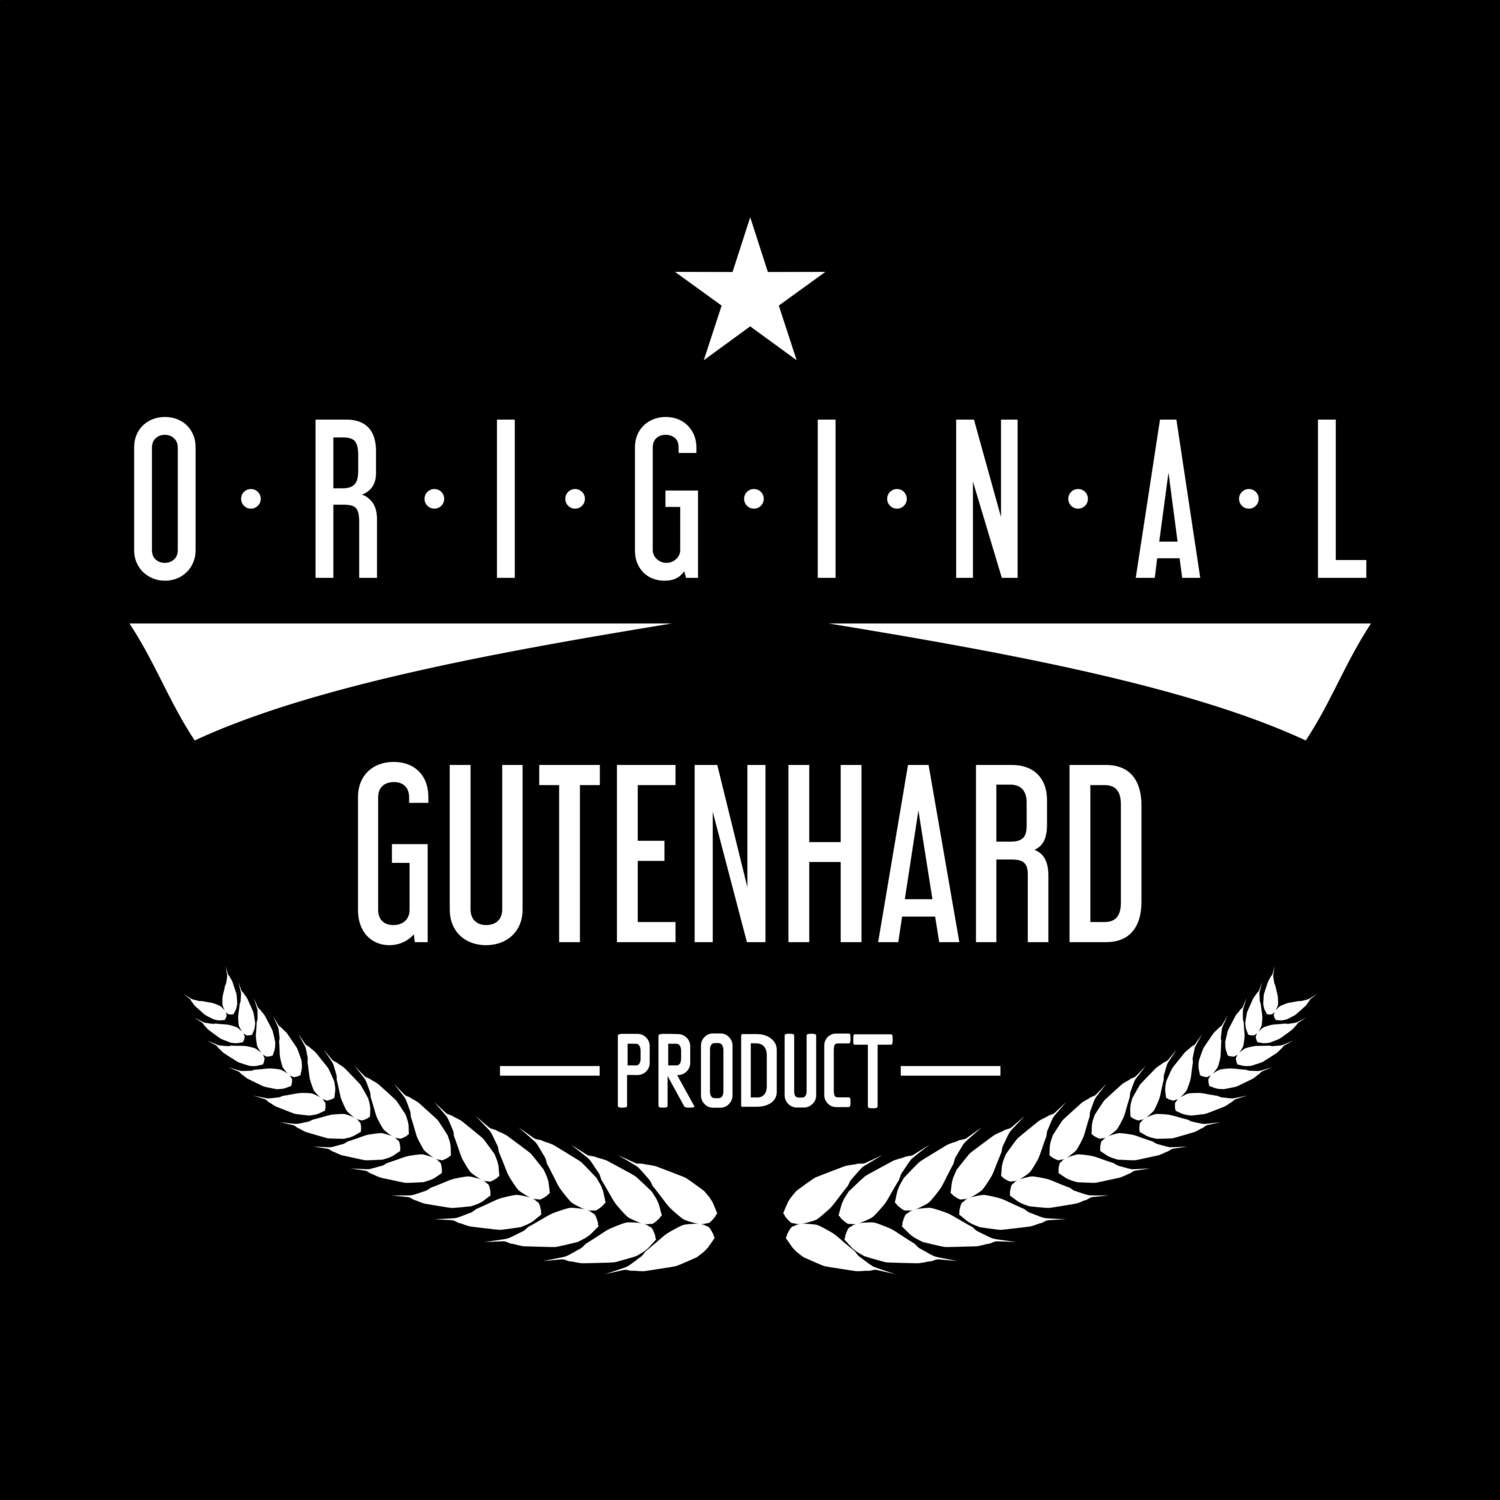 Gutenhard T-Shirt »Original Product«